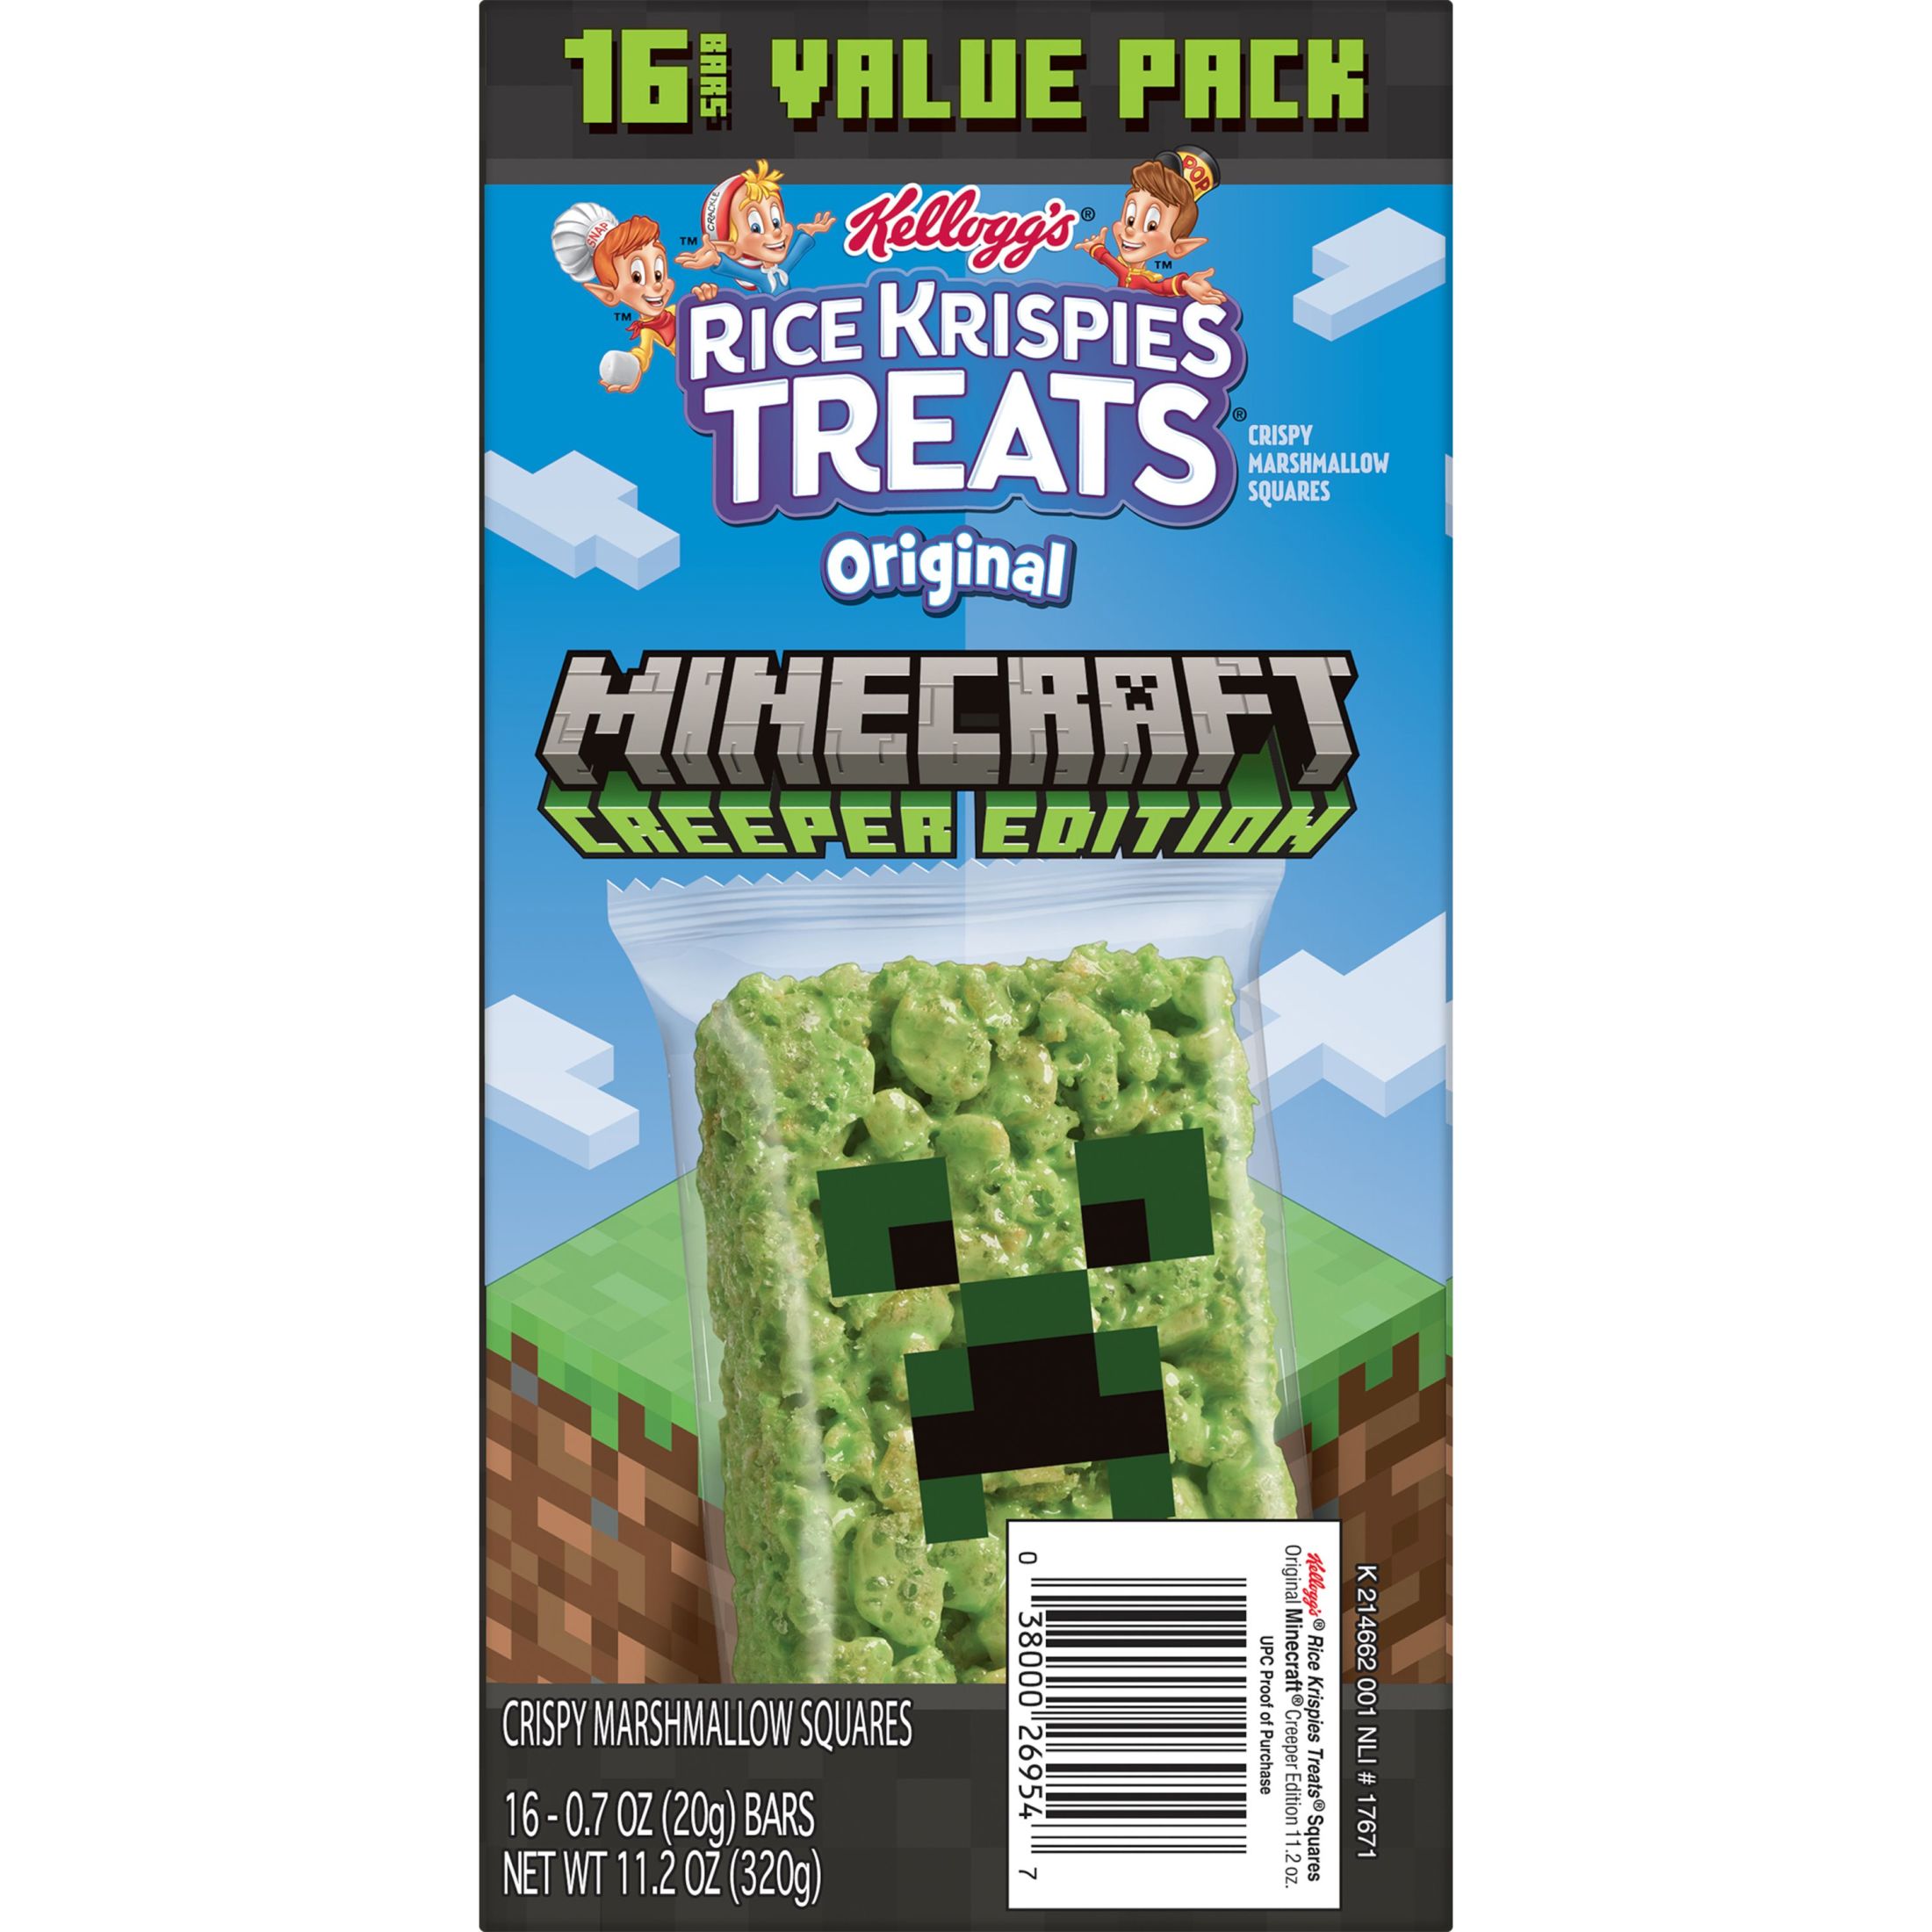 Rice Krispies Treats Minecraft Creeper Edition Original